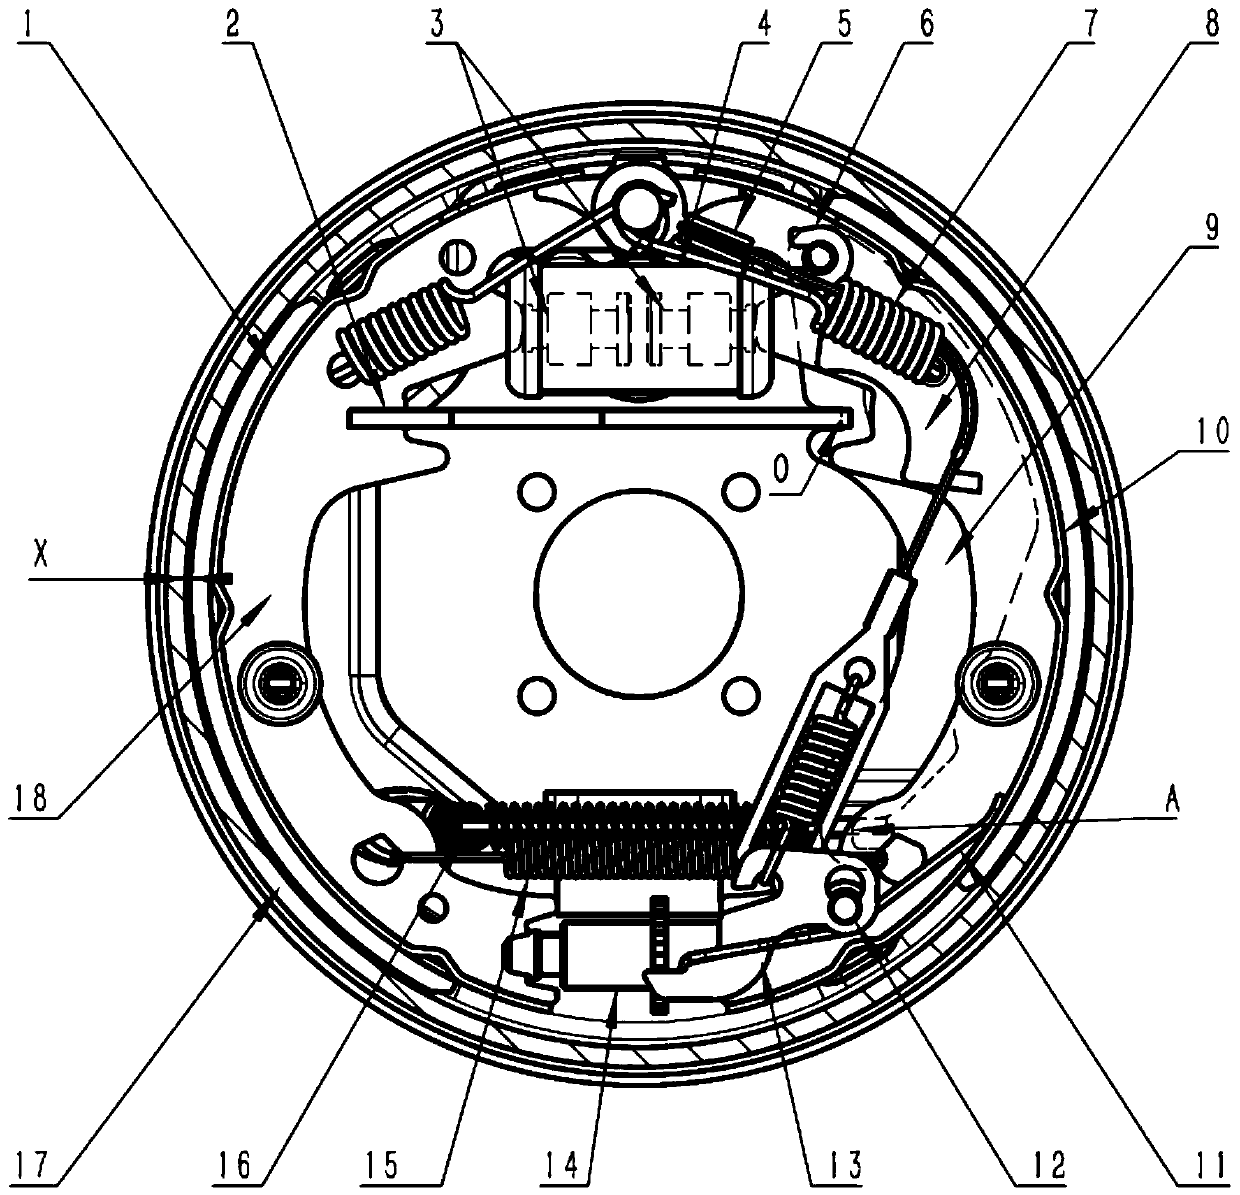 Self-adjustable servo type service drum brake with parking function